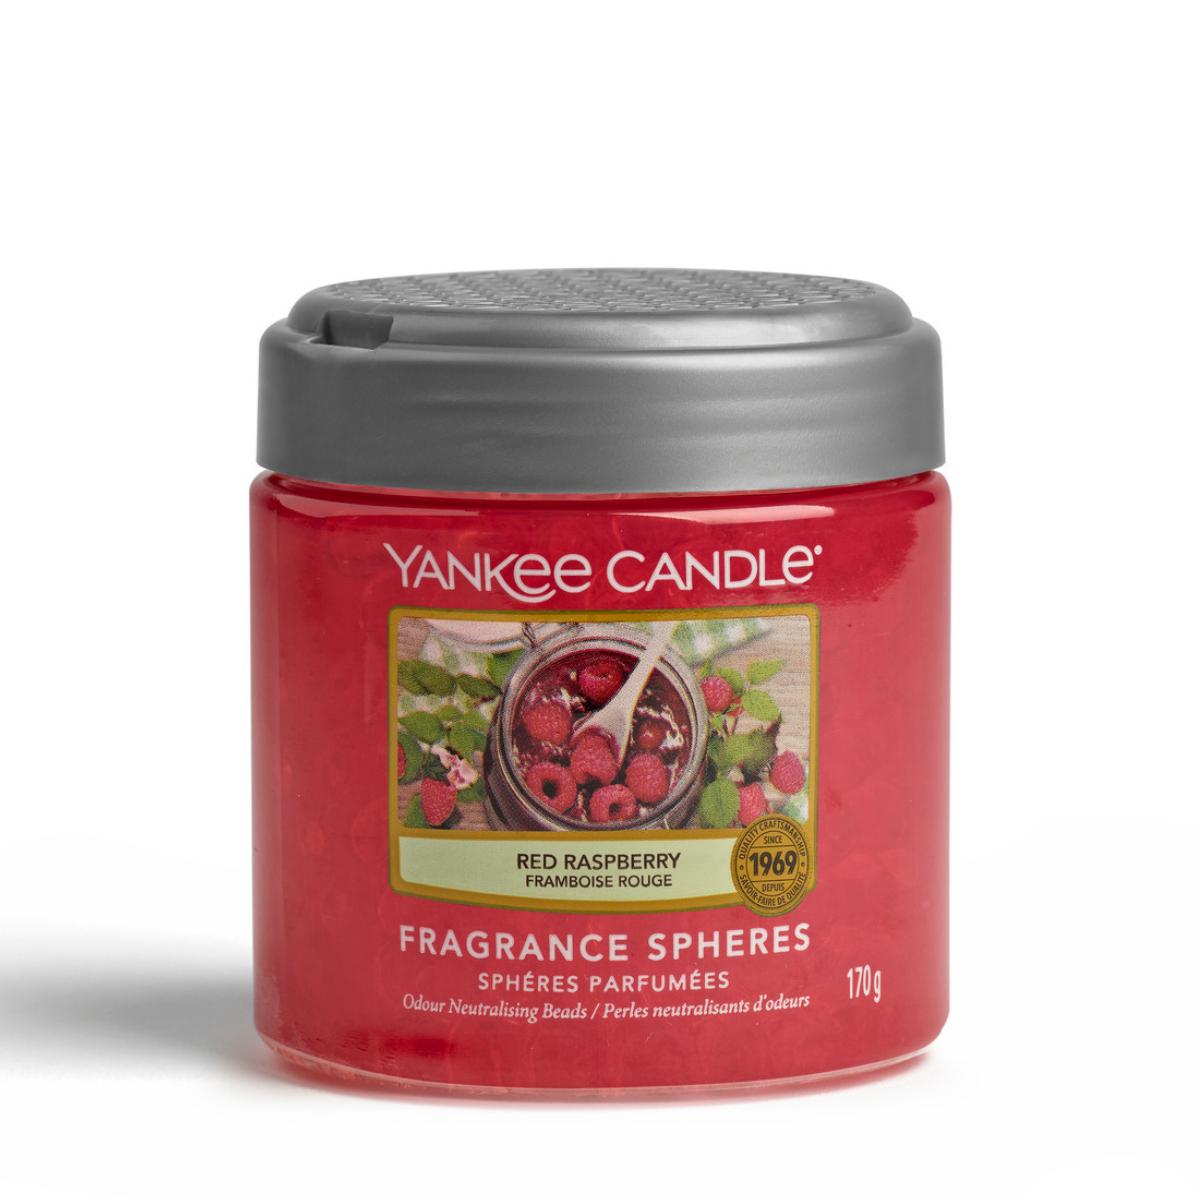 Red Raspberry - Fragrance Spheres 170g von Yankee Candle